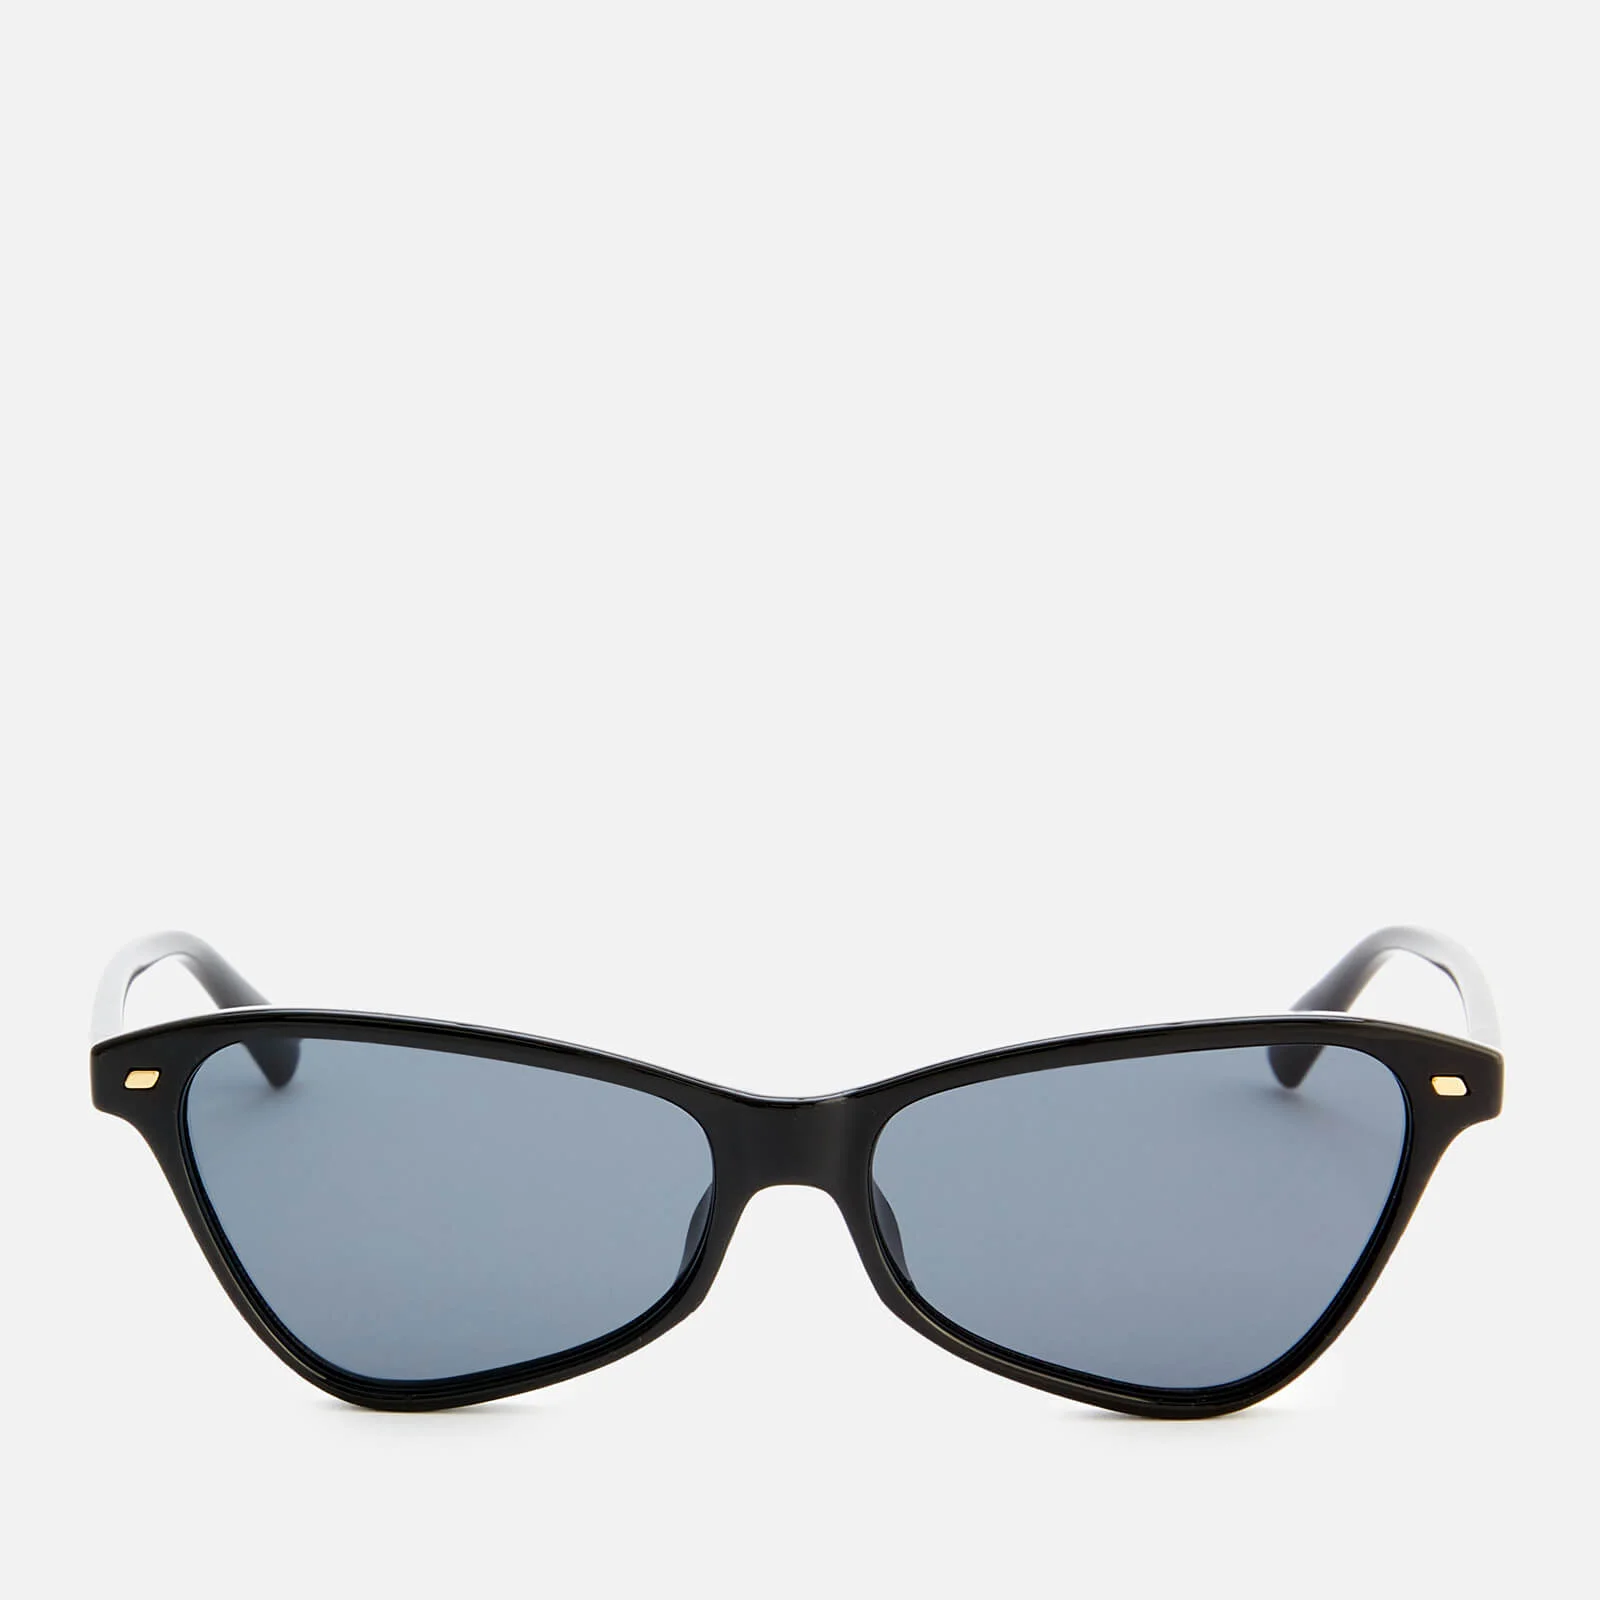 Le Specs Women's Situationship Sunglasses - Black Smoke Image 1